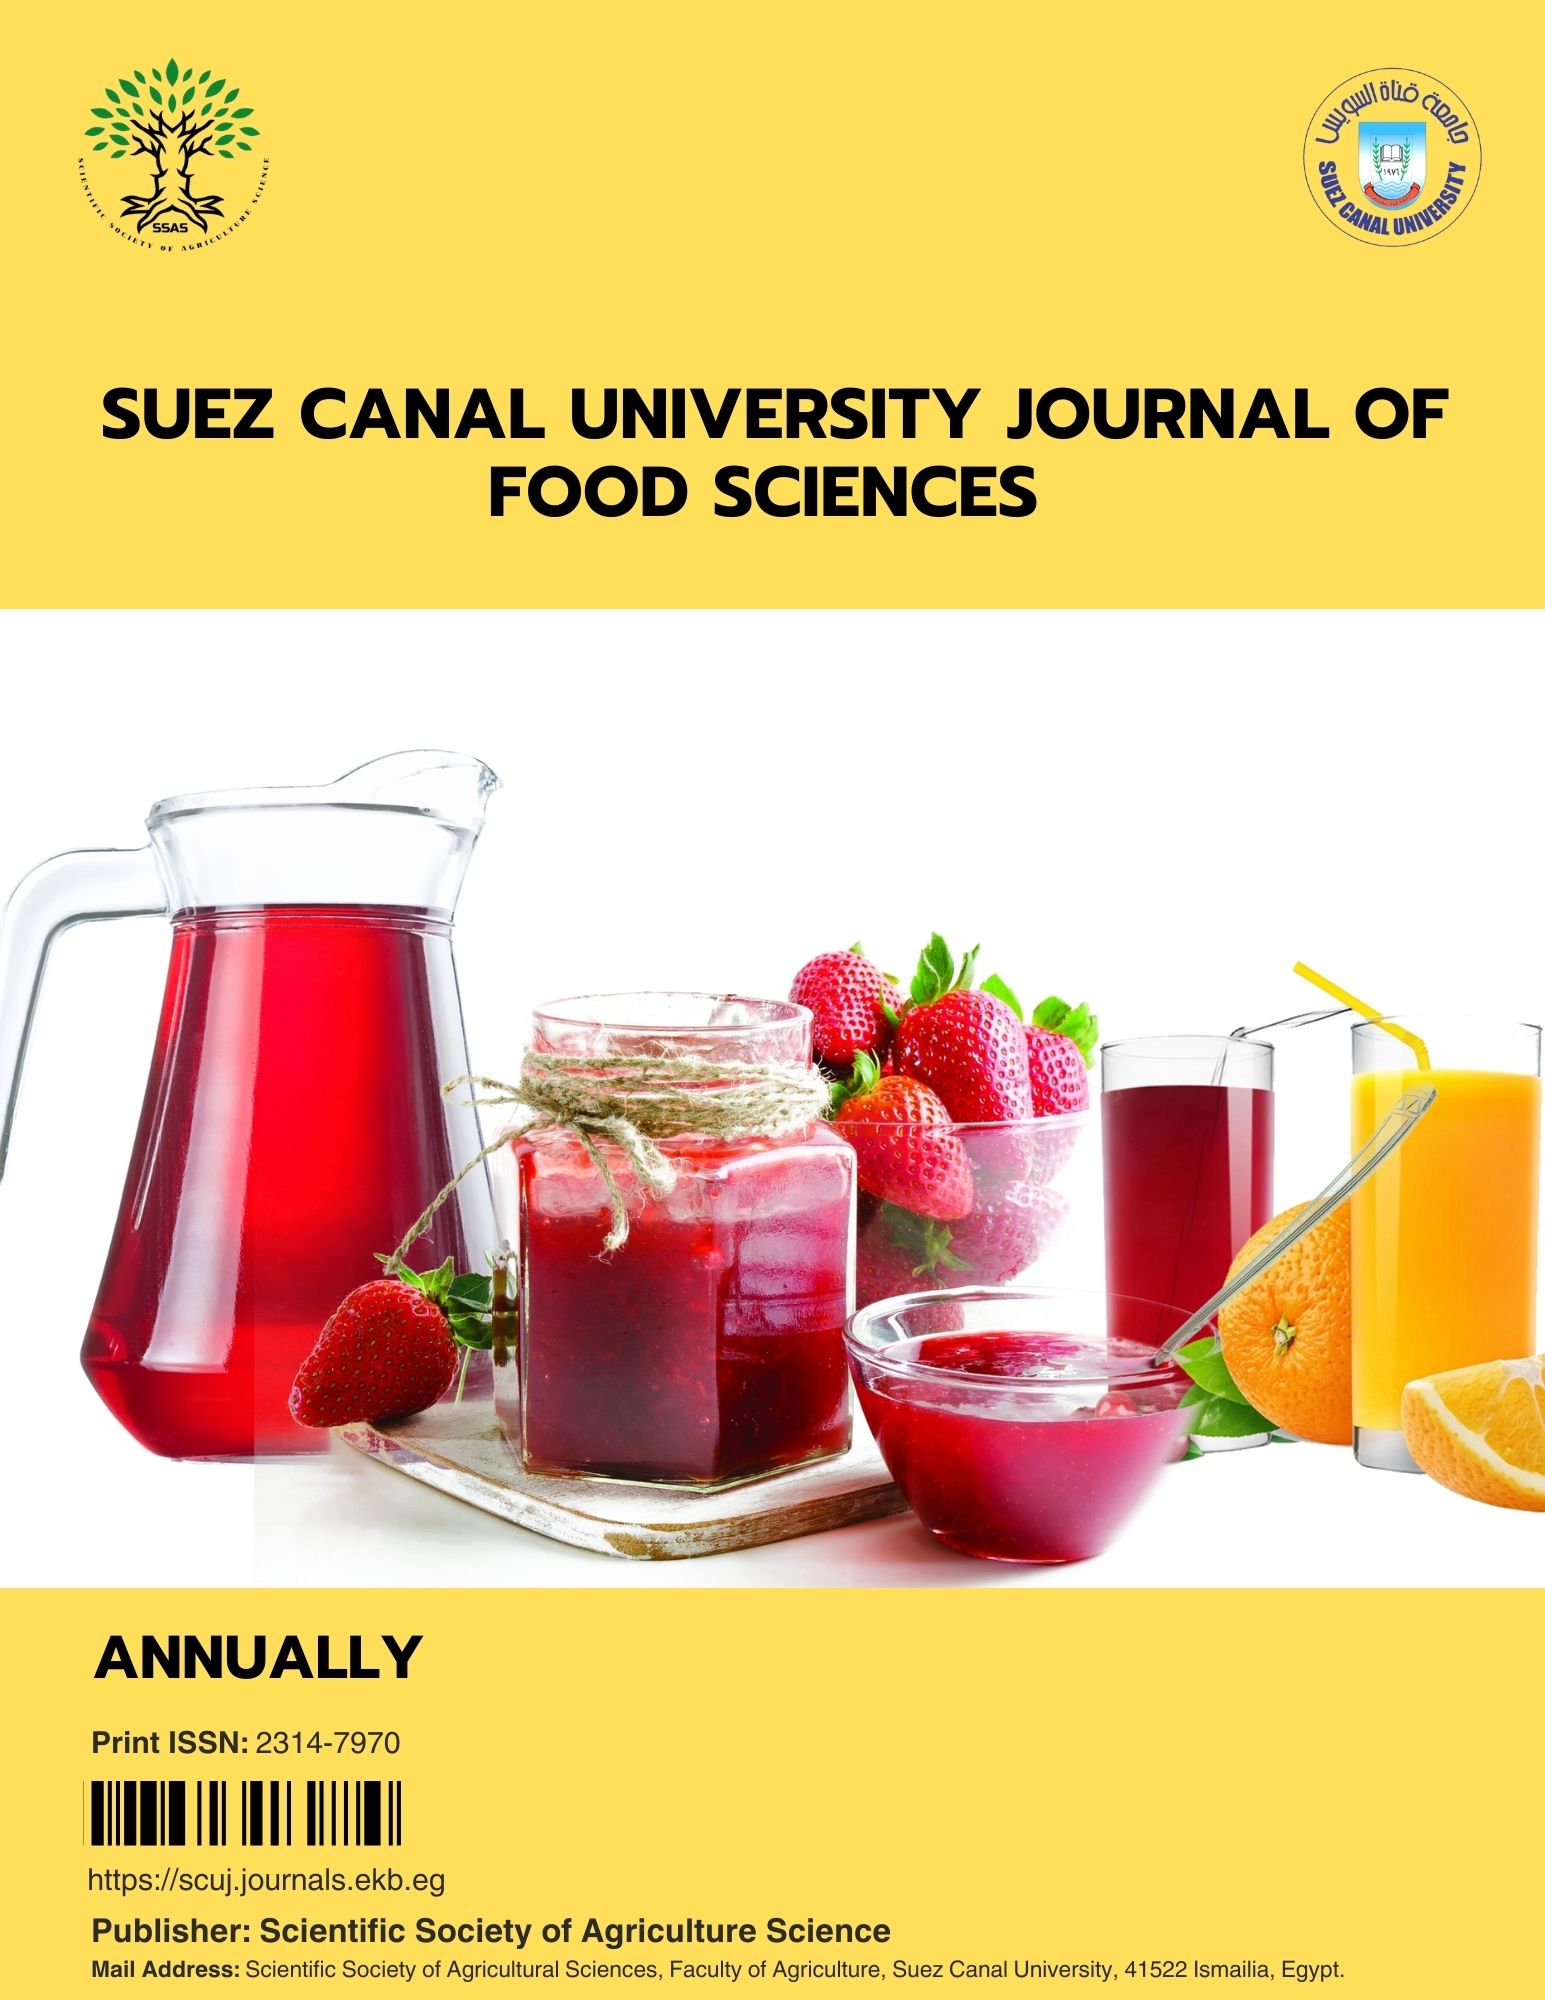 Suez Canal University Journal of Food Sciences